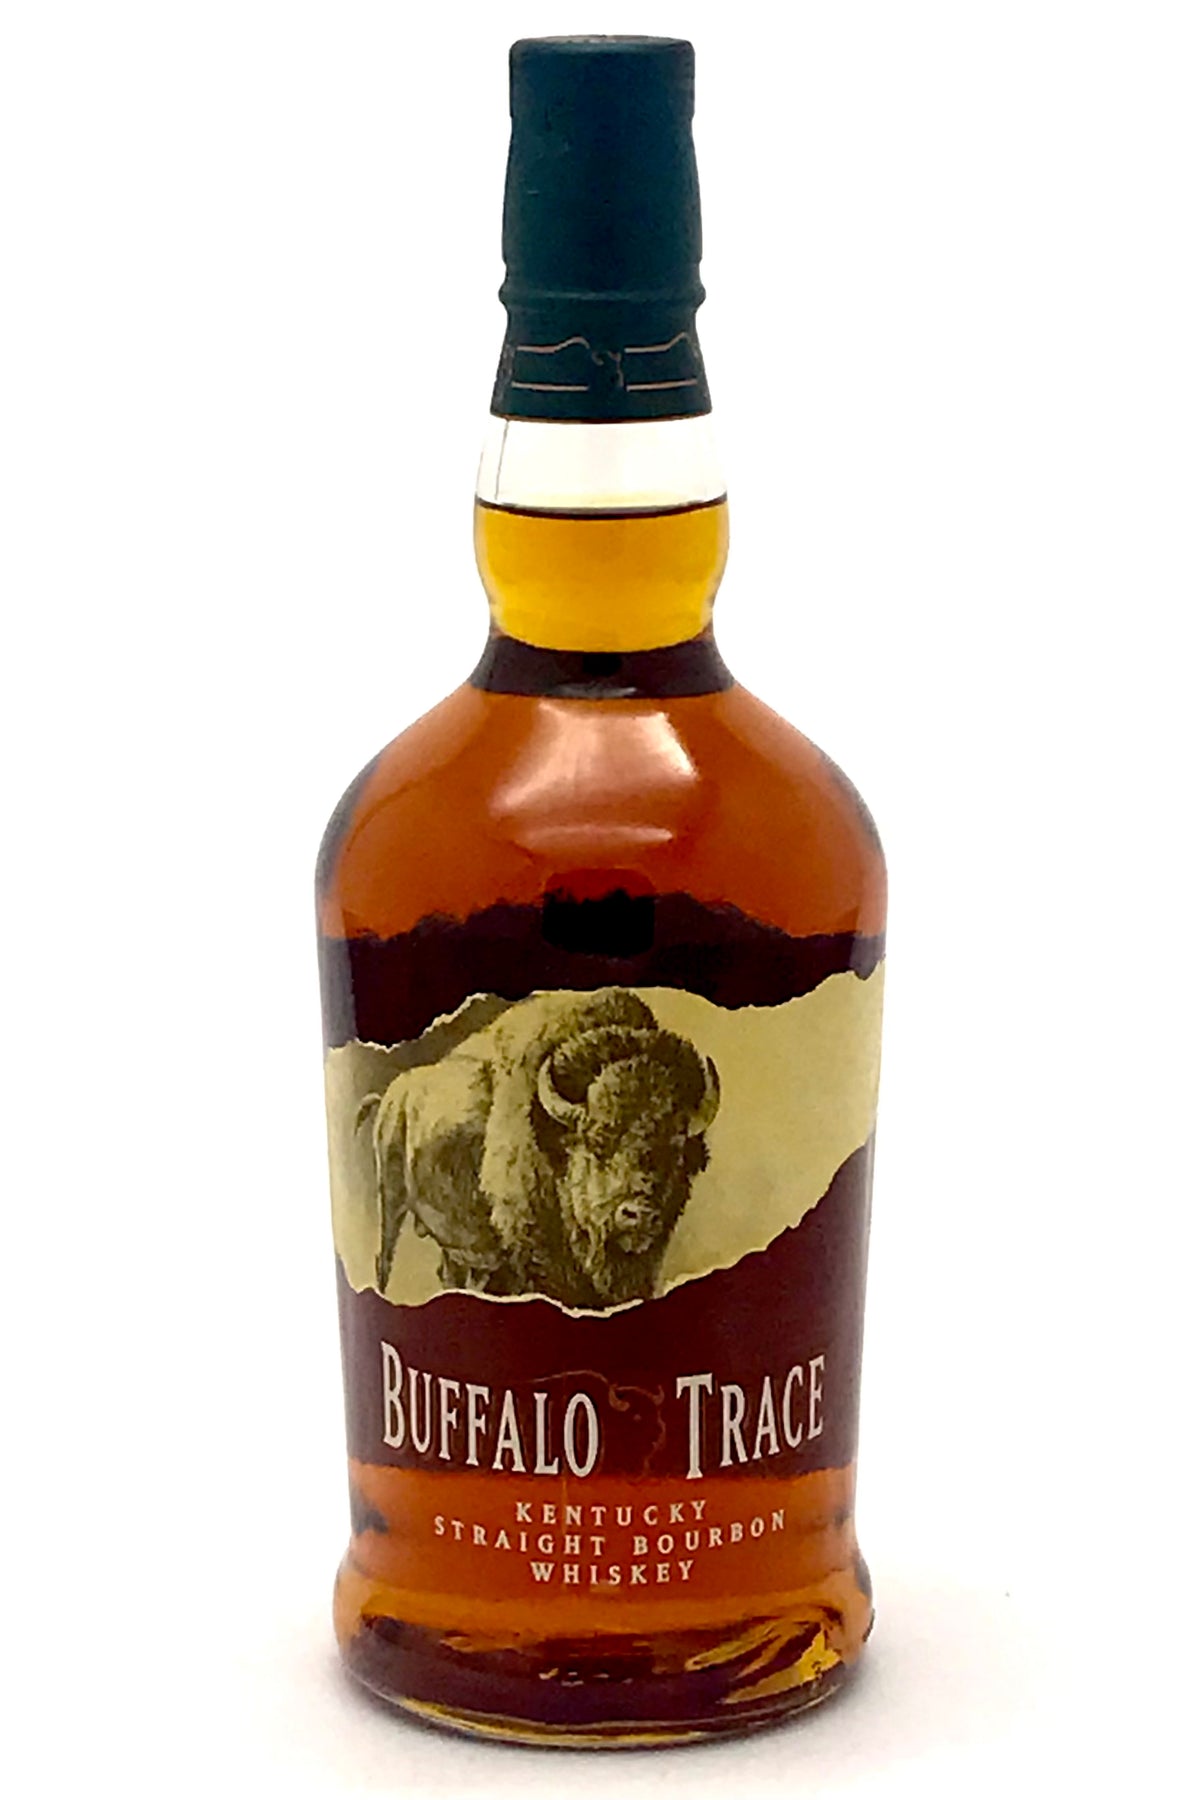 Buffalo Trace Bourbon Whiskey 750 ml